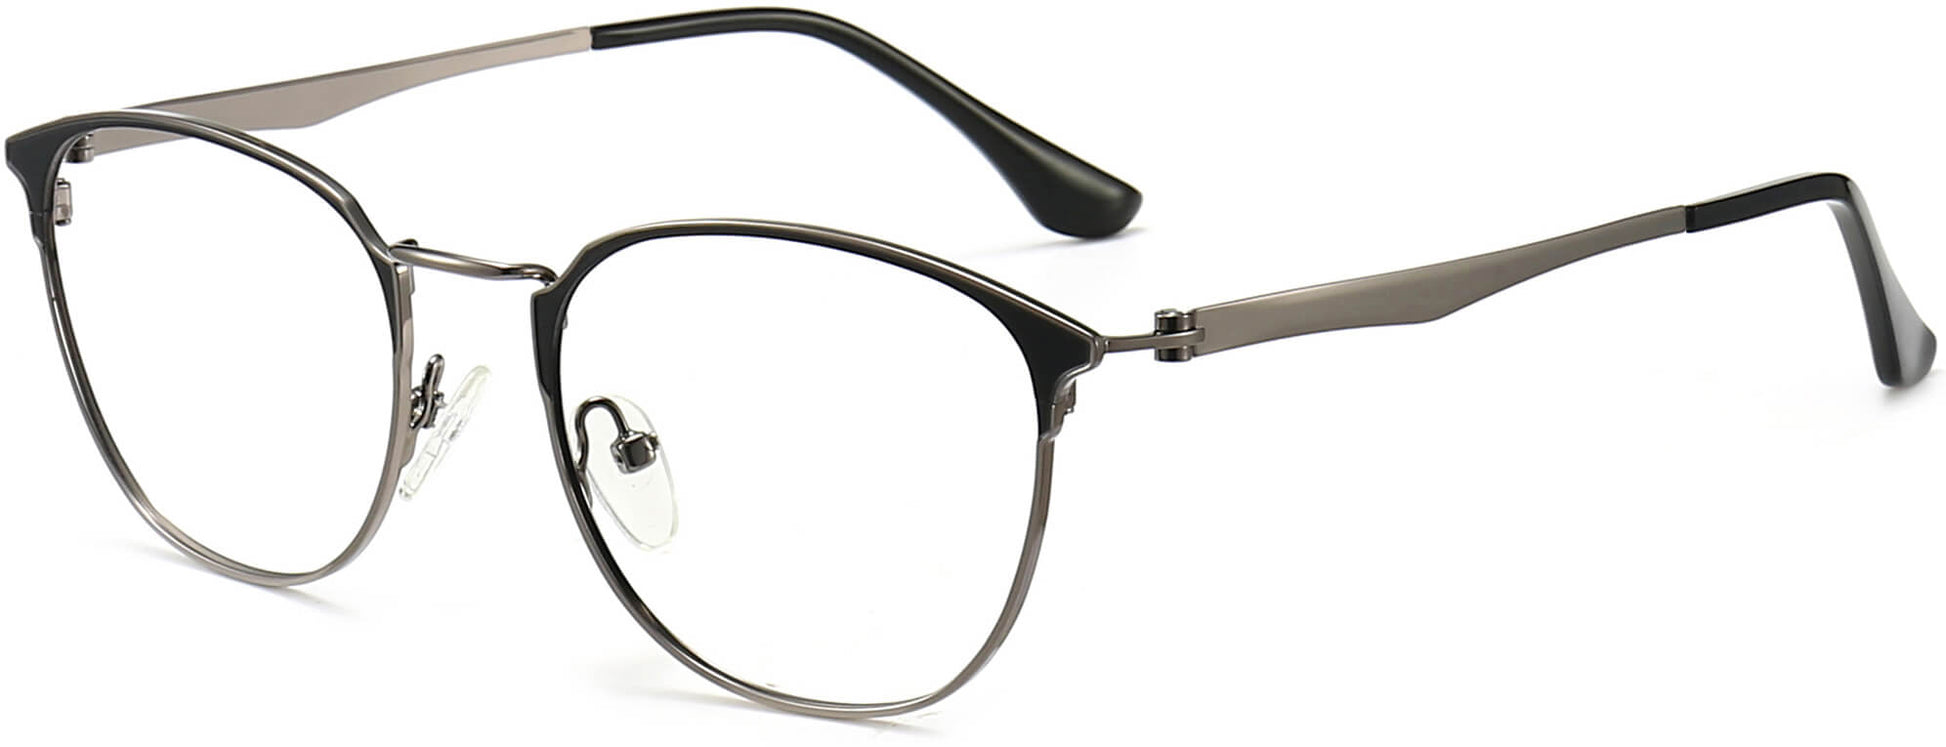 Benson Round Black Eyeglasses from ANRRI, angle view